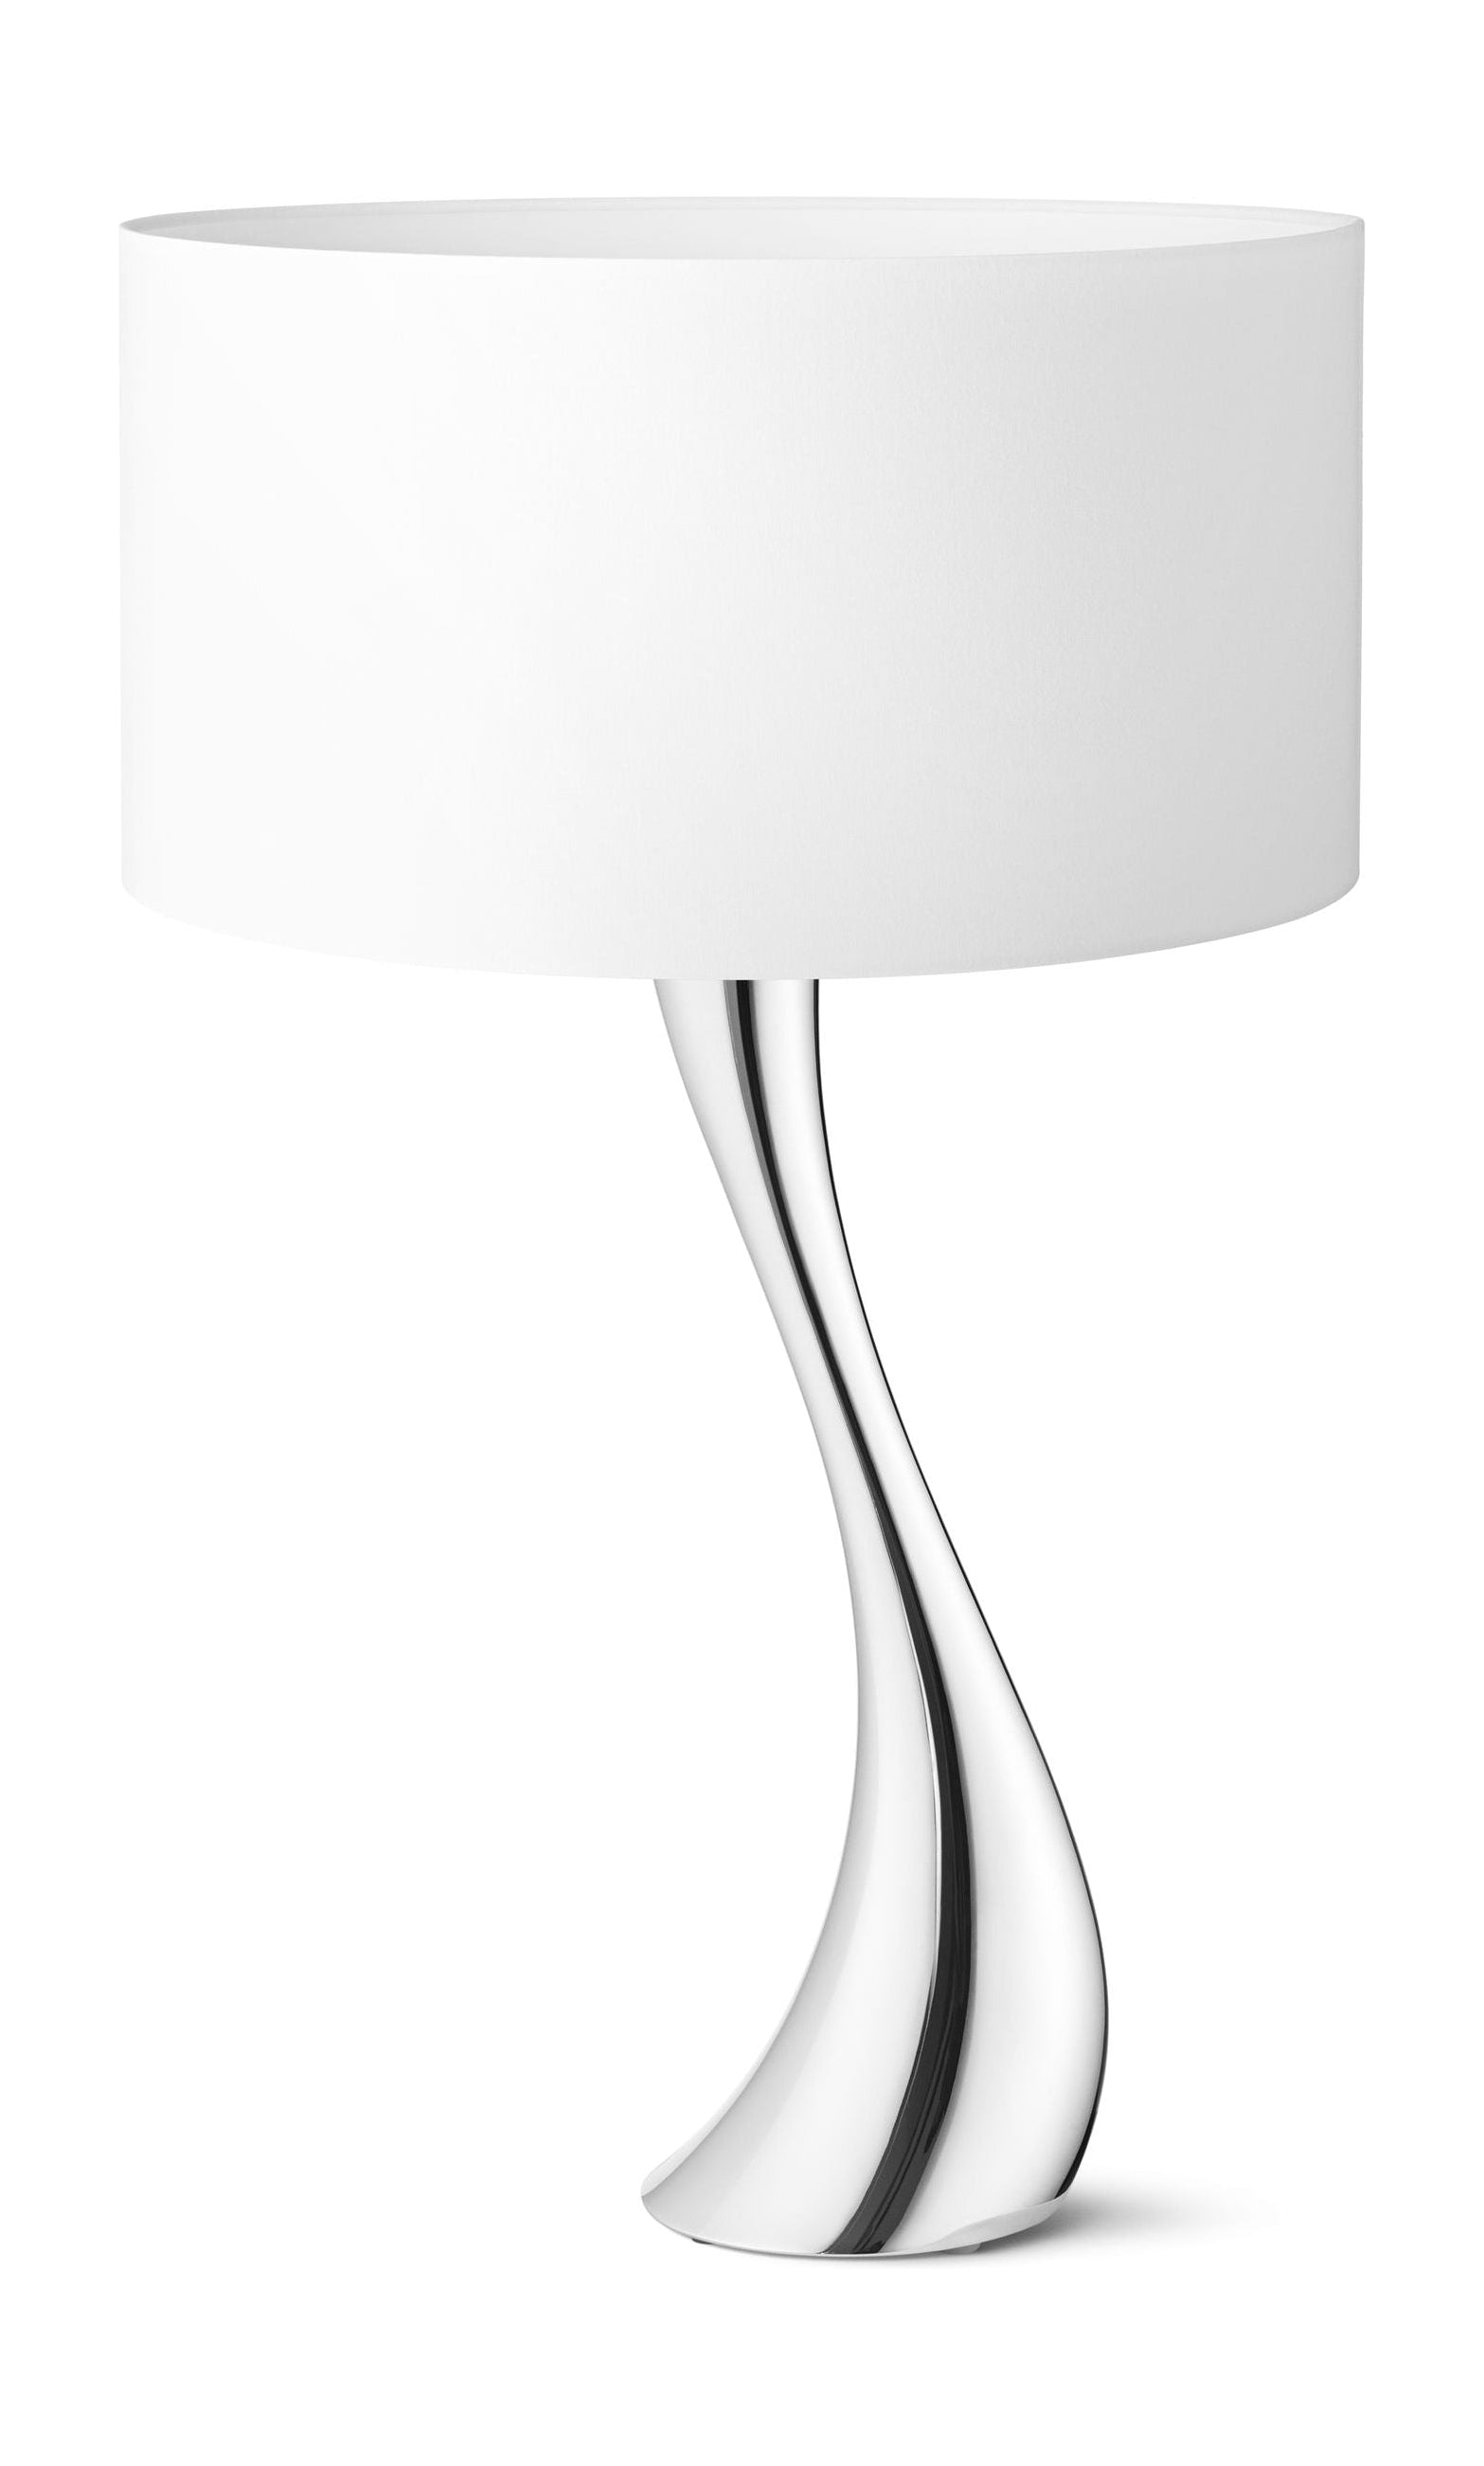 Georg Jensen Cobra -lamp wit, Ø 42 cm